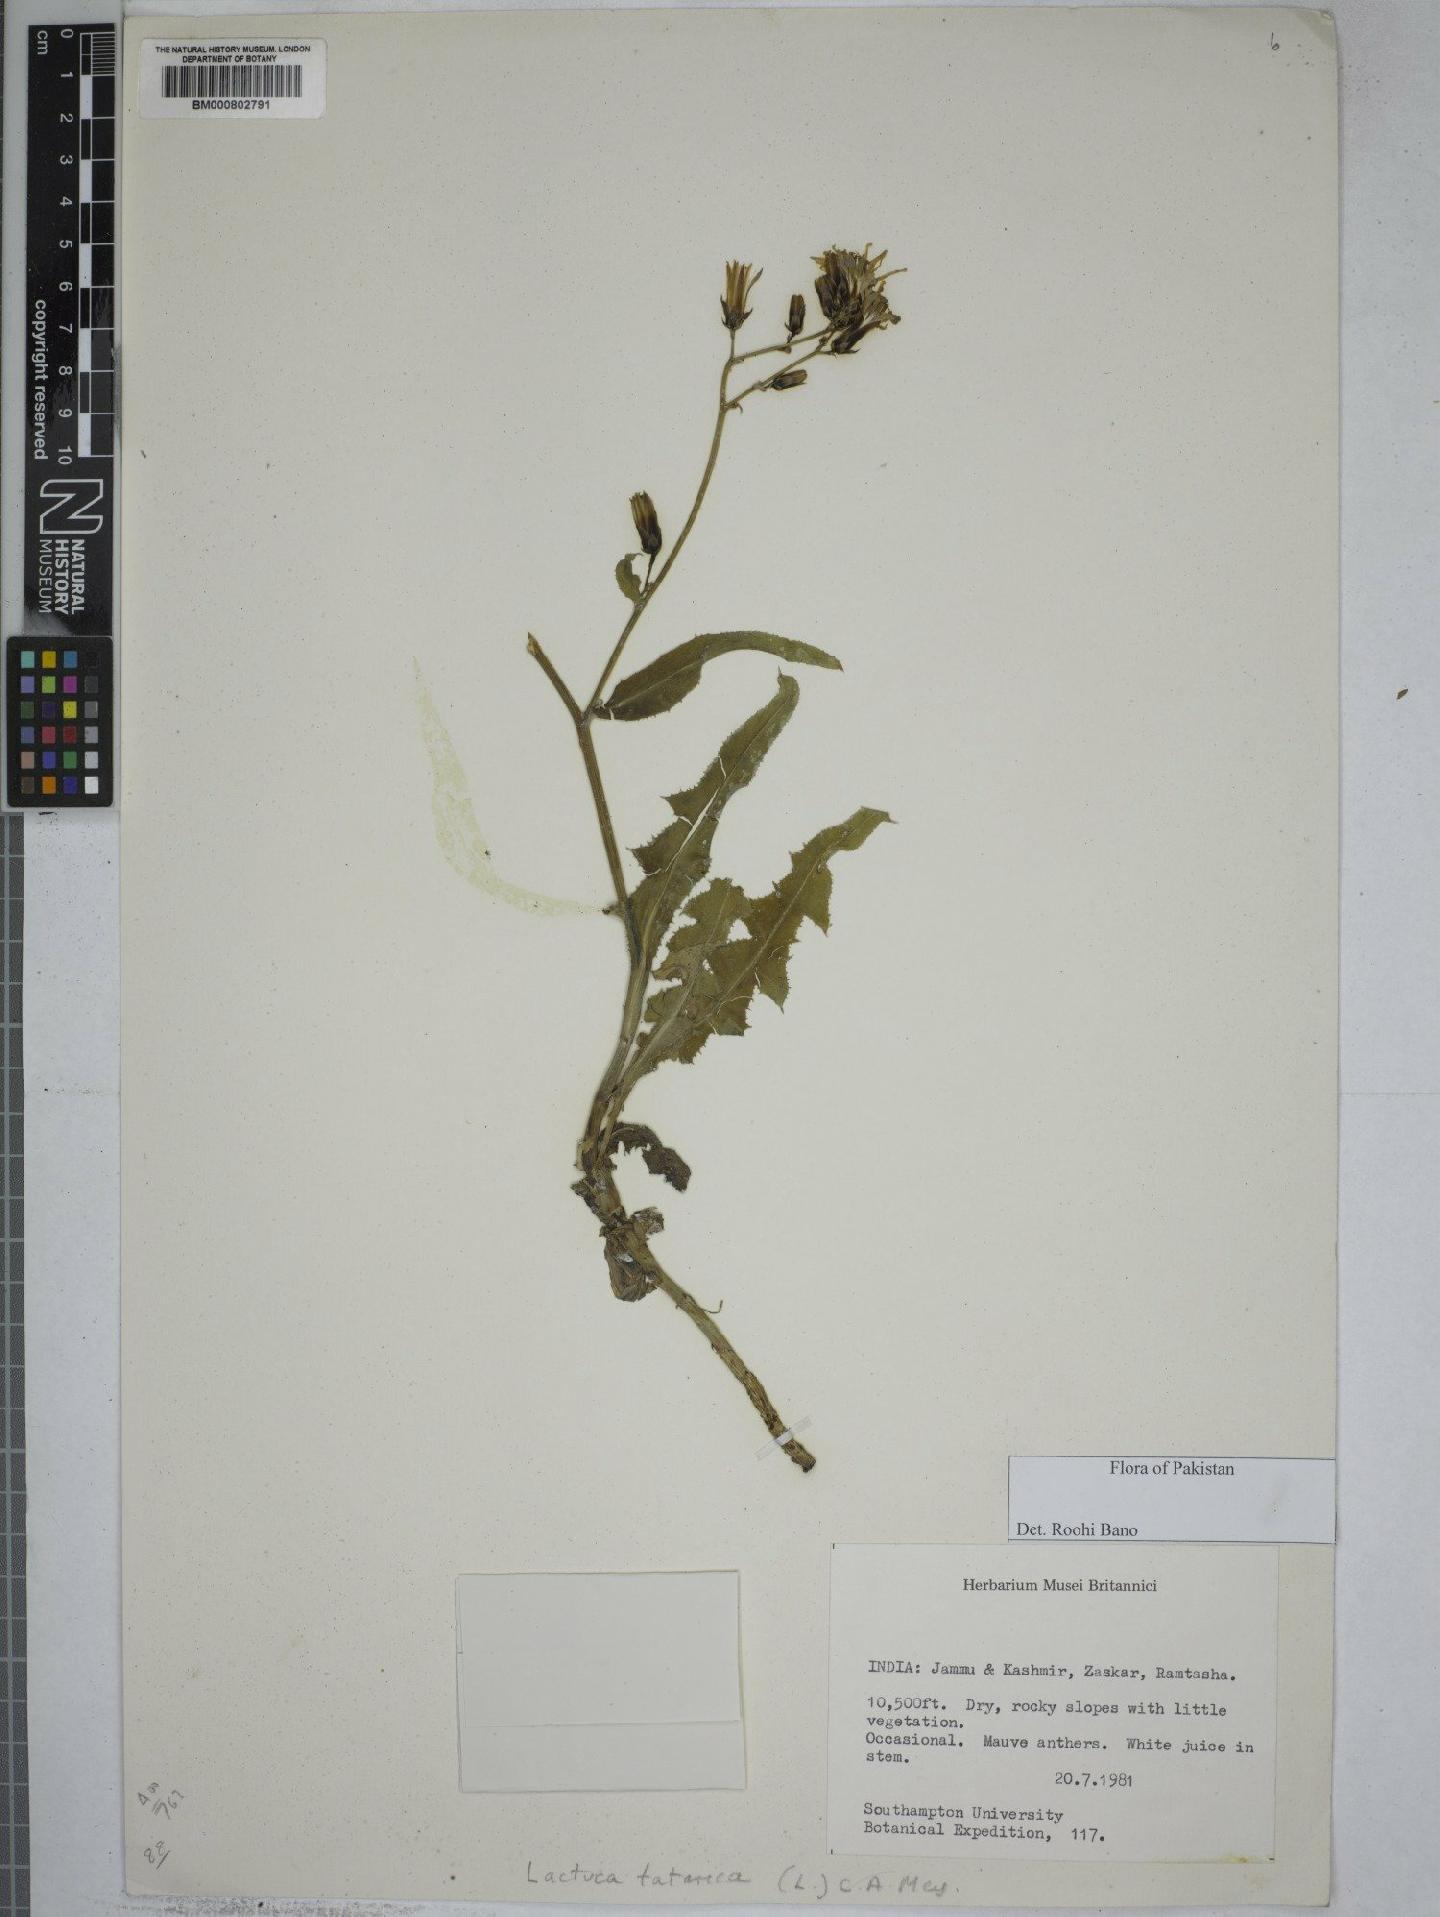 To NHMUK collection (Lactuca tatarica (L.) Mey; NHMUK:ecatalogue:4973722)